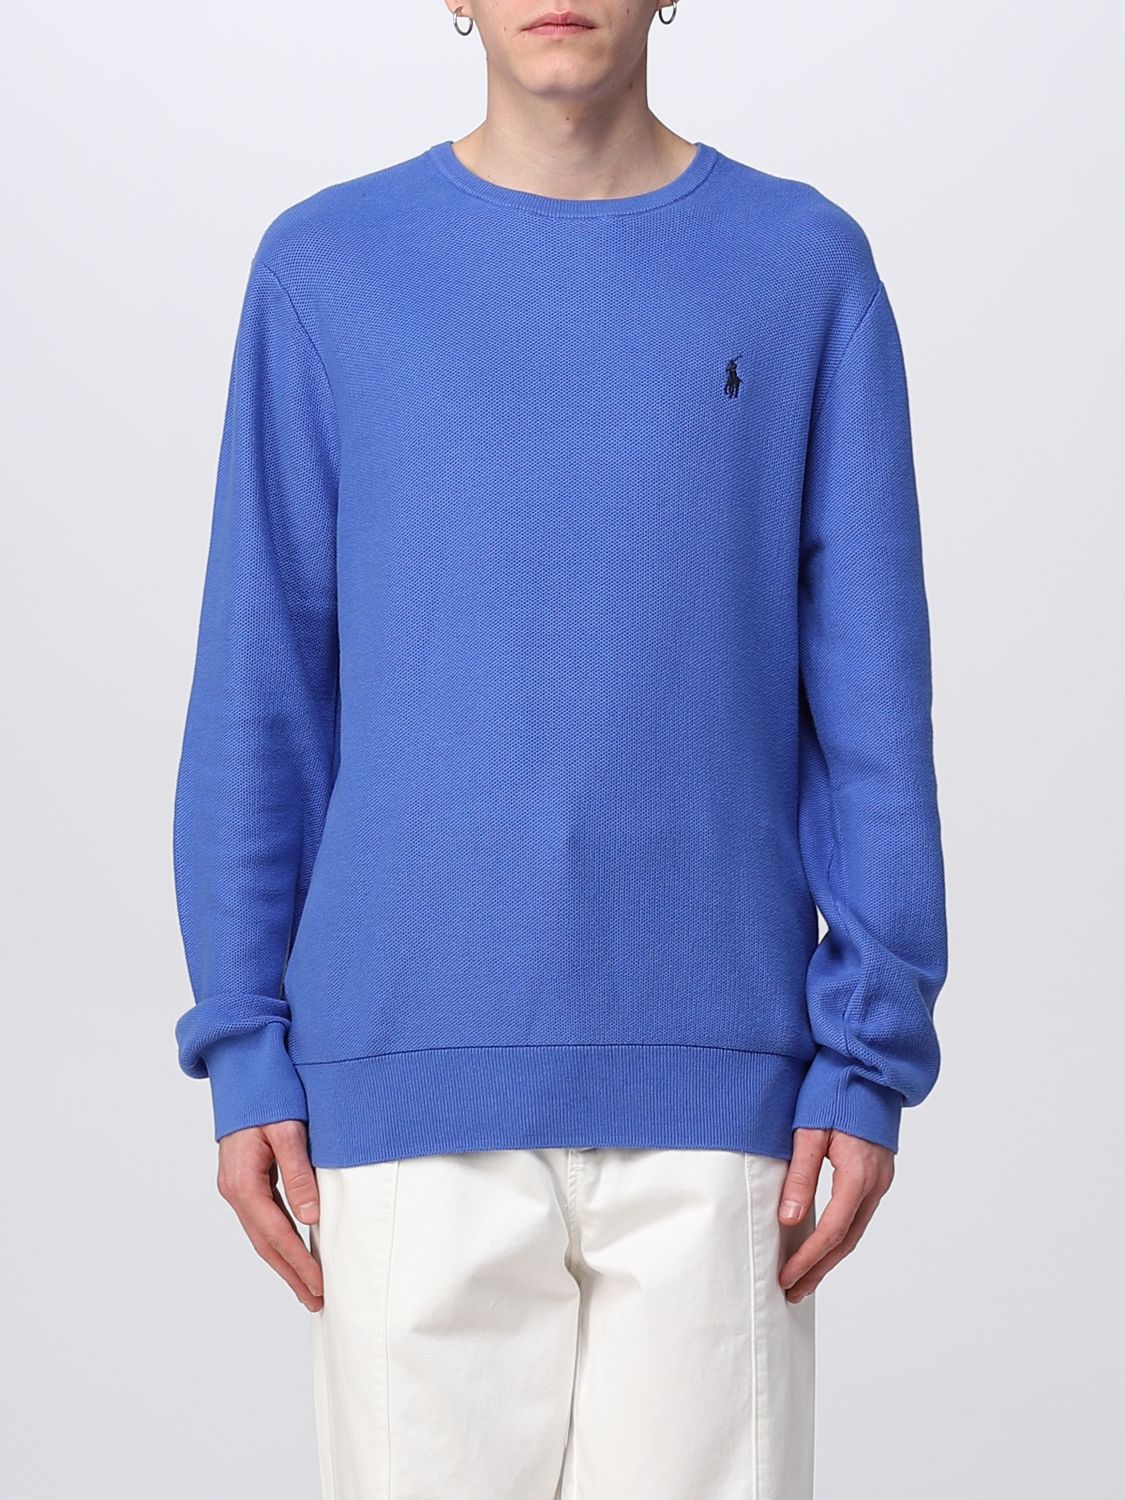 POLO RALPH LAUREN: sweater for man - Blue | Polo Ralph Lauren sweater  710895559 online on 